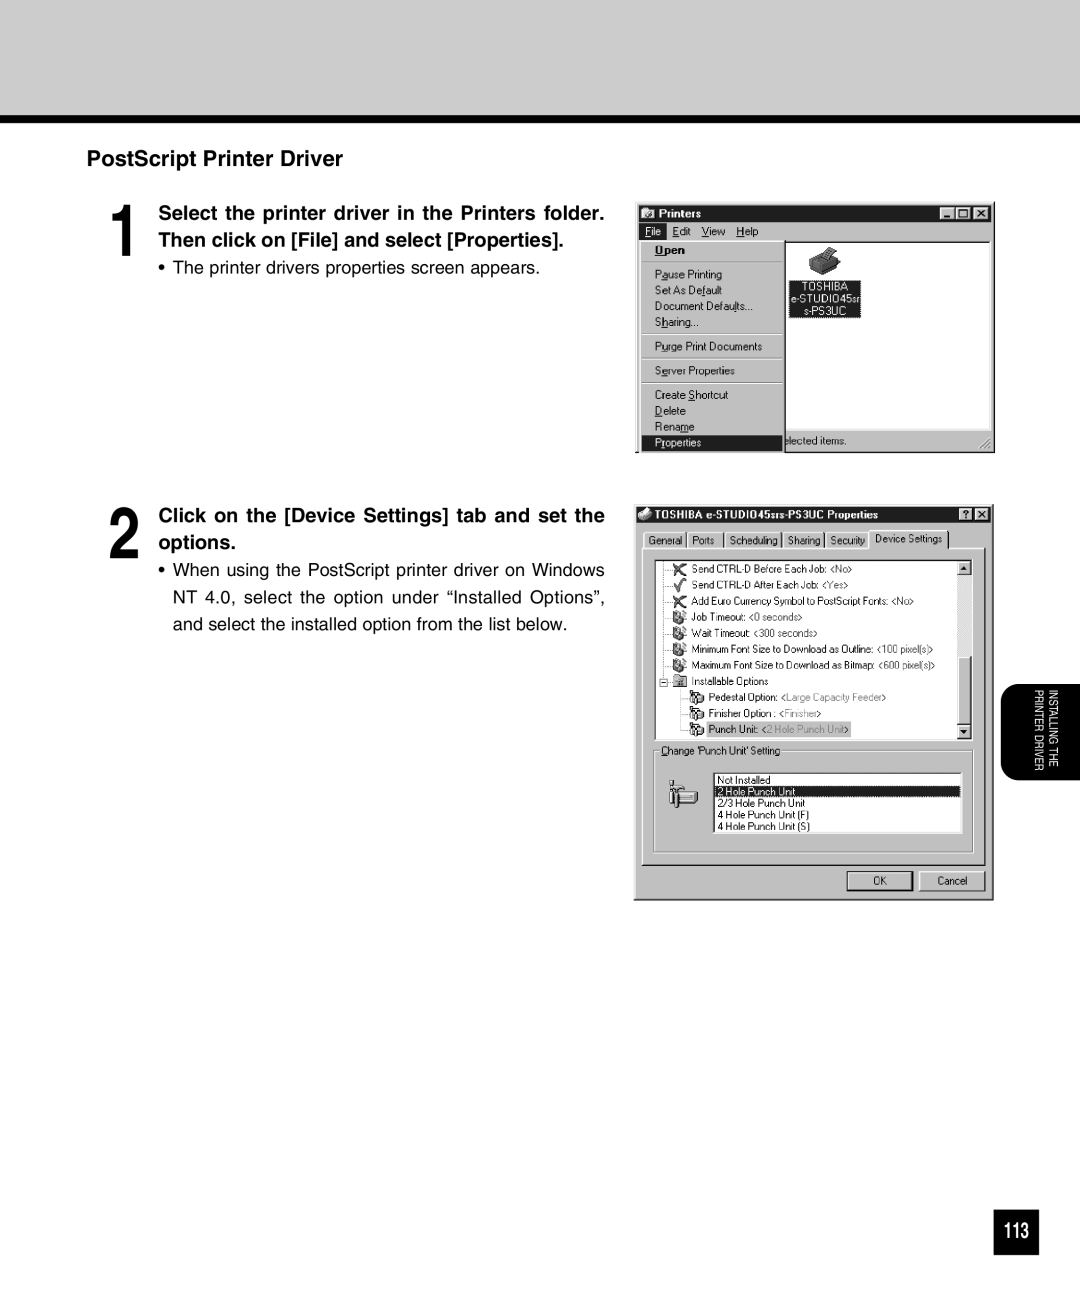 Toshiba GA-1040 manual PostScript Printer Driver, Click on the Device Settings tab and set the options 